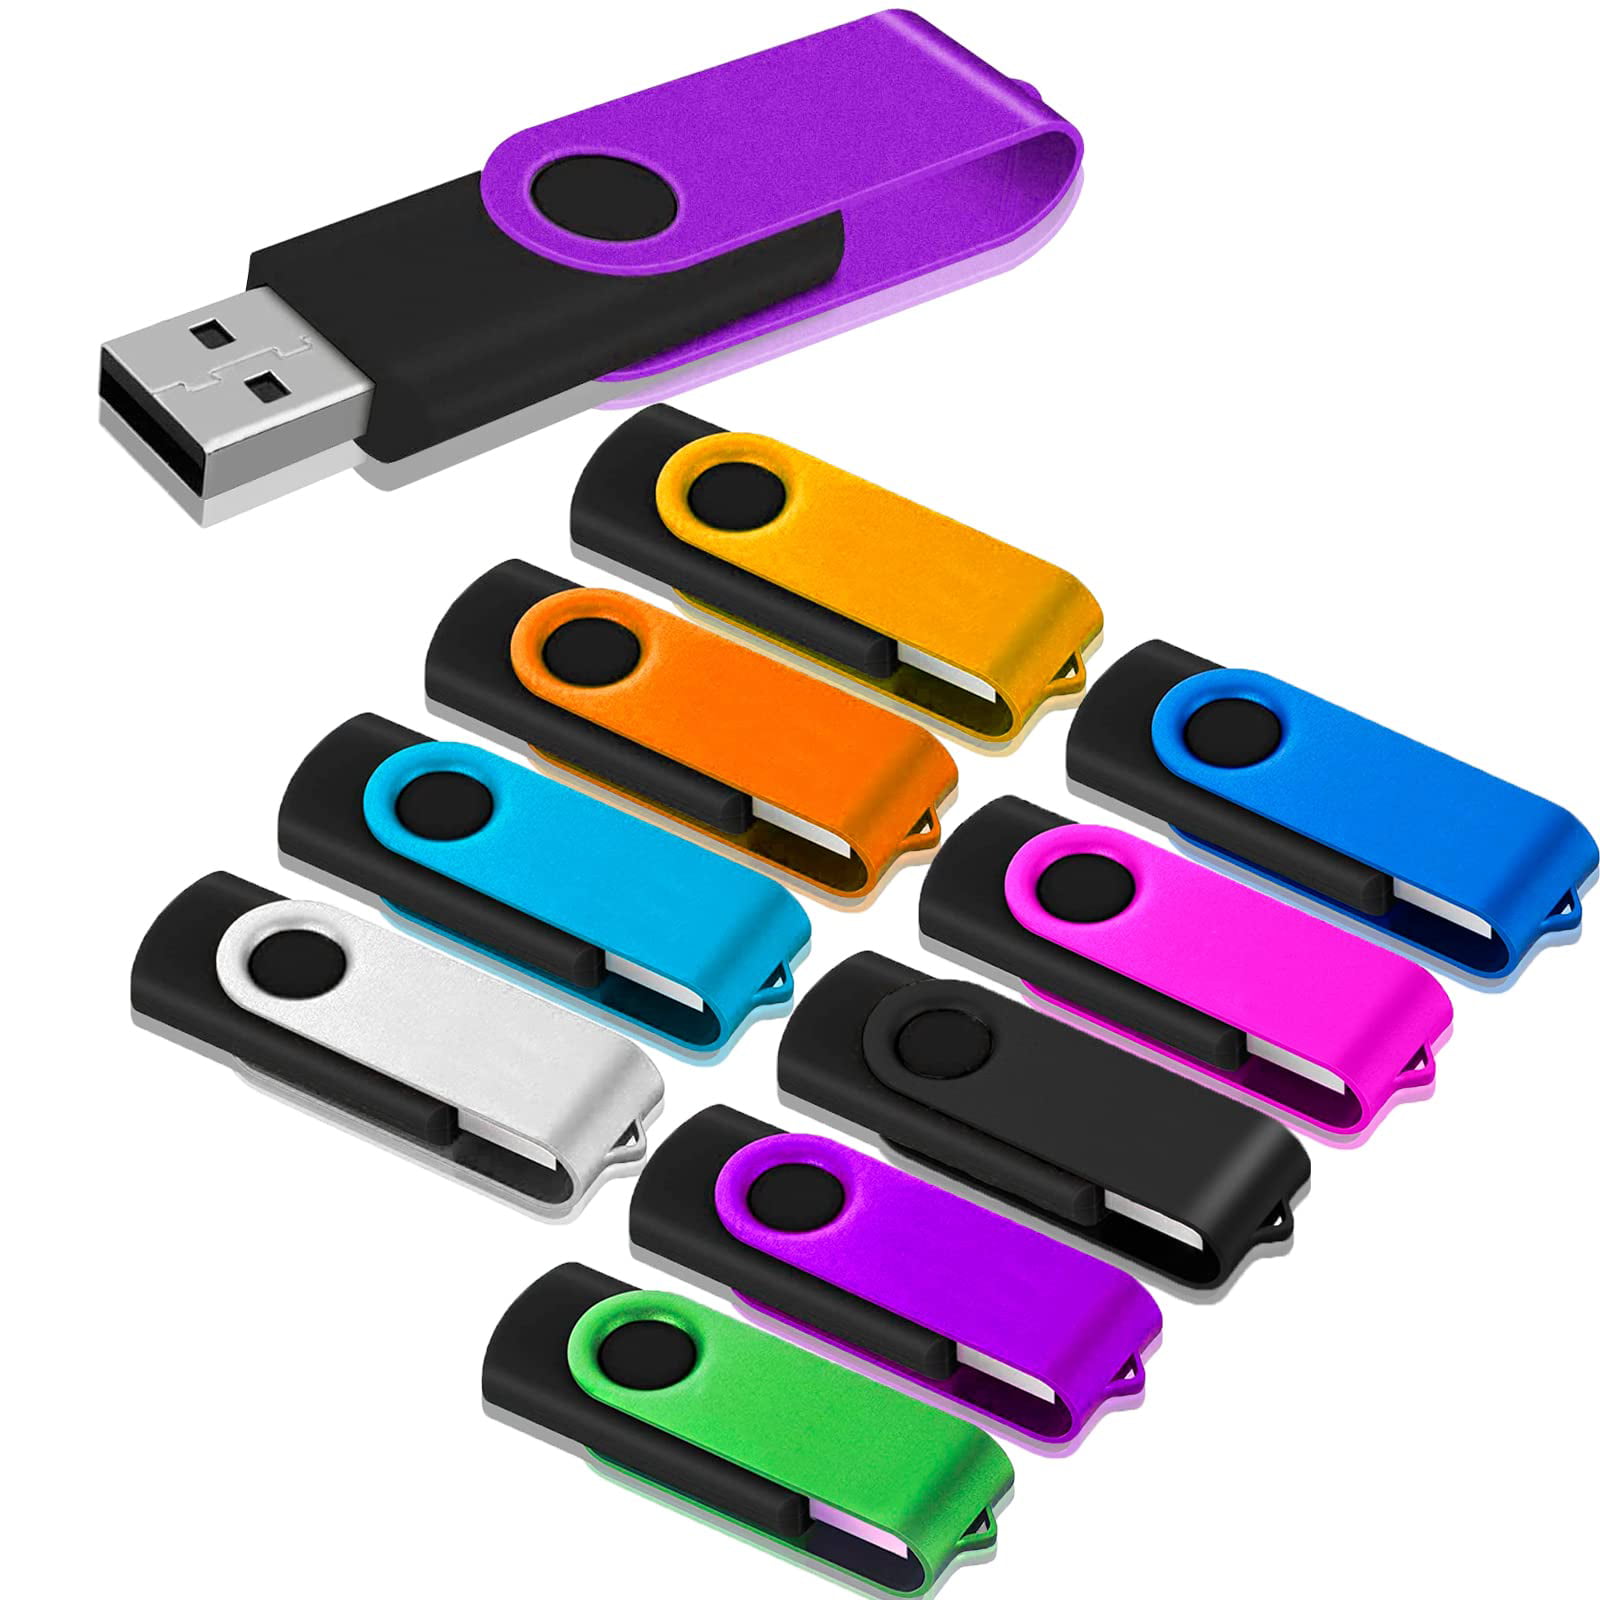 Flash Drive 16GB 10 USB Drives 16 Thumb Drive Pack Bulk of 10 USB Drives Swivel Design with LED Indicator, Jump Drive, Gig Stick, Memory Pen Drive - Walmart.com